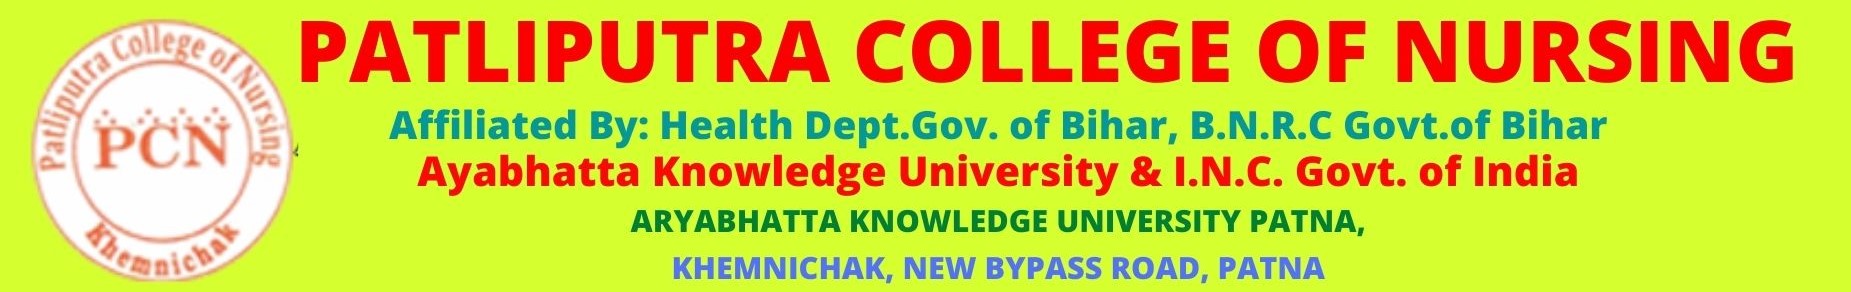 
private nursing college in patna|ANM School in Patna, ANM School in Bihar| Best ANM School in Patna|Best ANM School in Bihar|
Top ANM School in Patna|Top ANM School in Bihar|GNM School in Patna|GNM School in Bihar|
Best GNM School in Patna| Best GNM School in Bihar|Top GNM School in Patna|Top GNM School in Bihar|
B.Sc nursing College in Patna|B.Sc nursing College in Bihar|Top B.Sc nursing College in Patna|Top B.Sc nursing College in Bihar|
M.SC Nursing College in Patna|M.SC Nursing College in Bihar|PVT M.SC Nursing College in Patna|PVT M.SC Nursing College in Bihar|
PVT ANM School in Patna|PVT ANM School in Bihar |private nursing college in bihar